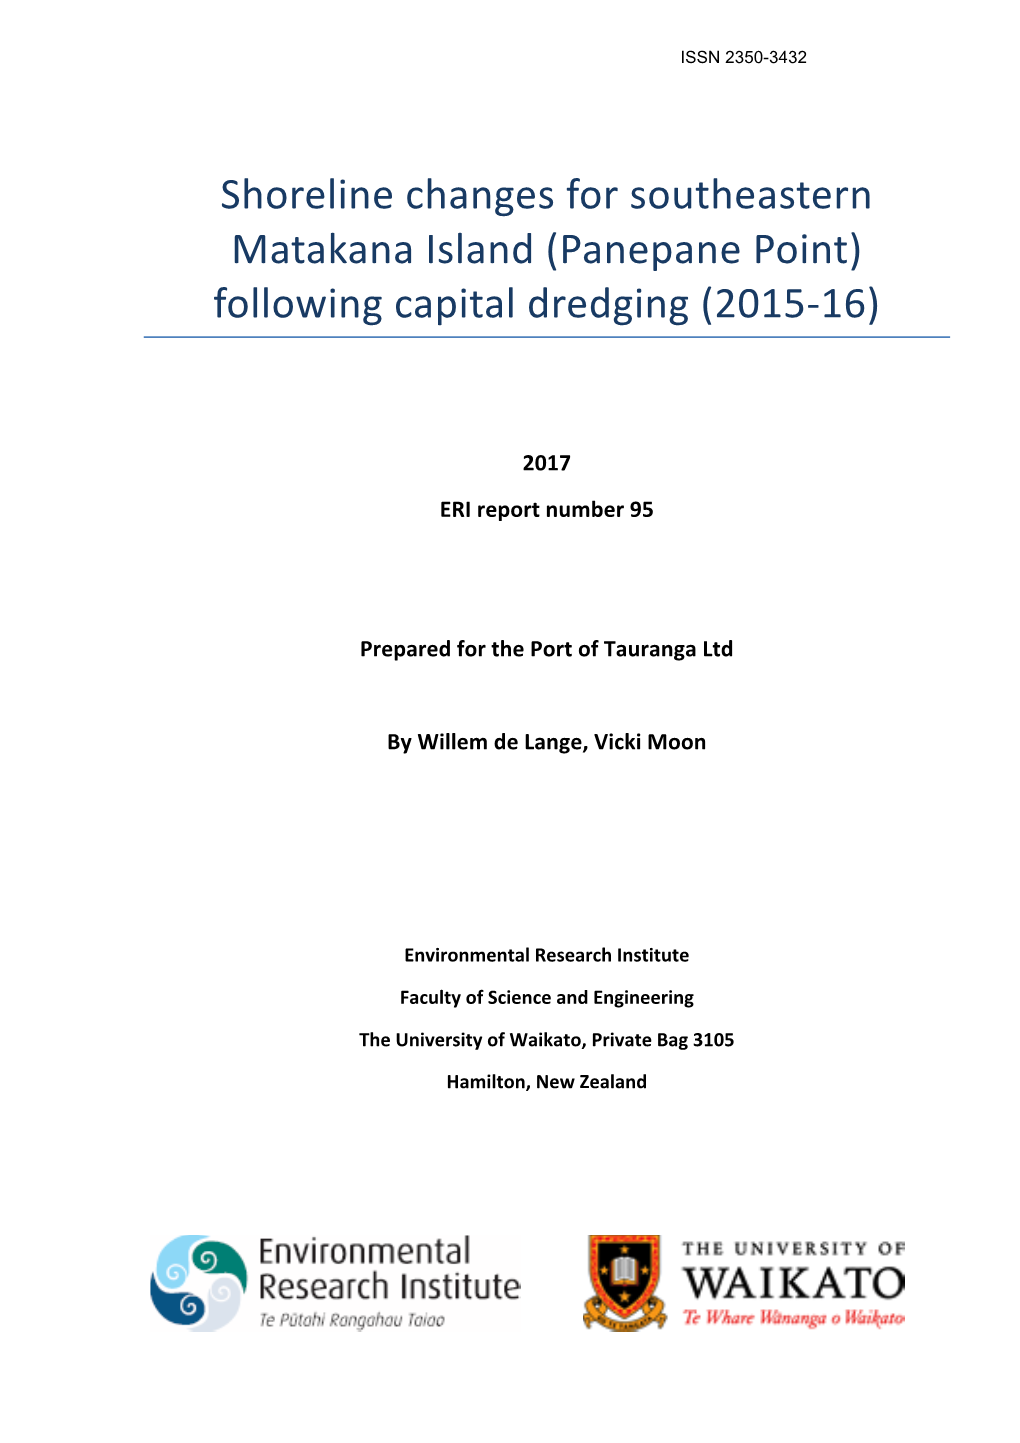 Shoreline Changes for Southeastern Matakana Island (Panepane Point) Following Capital Dredging (2015-16)